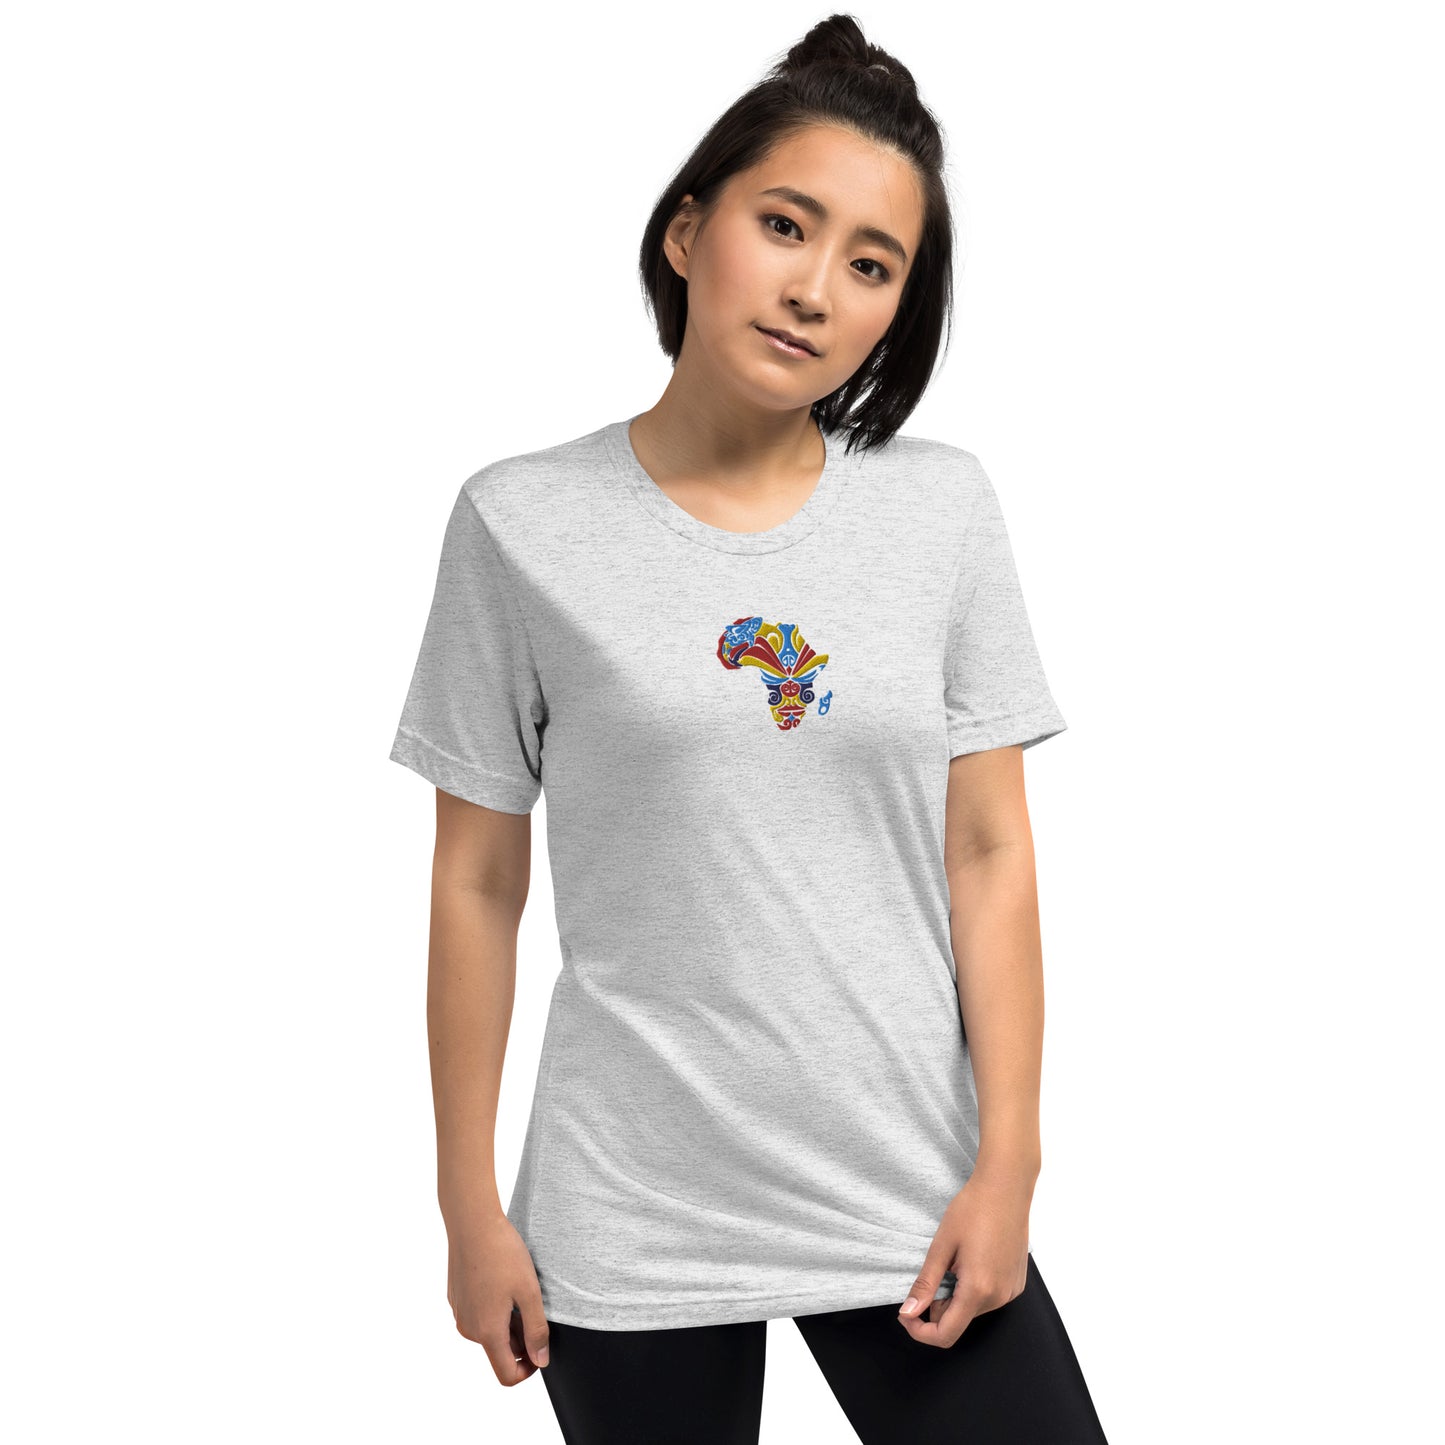 Short Sleeve T-shirt - Banamerica Collection